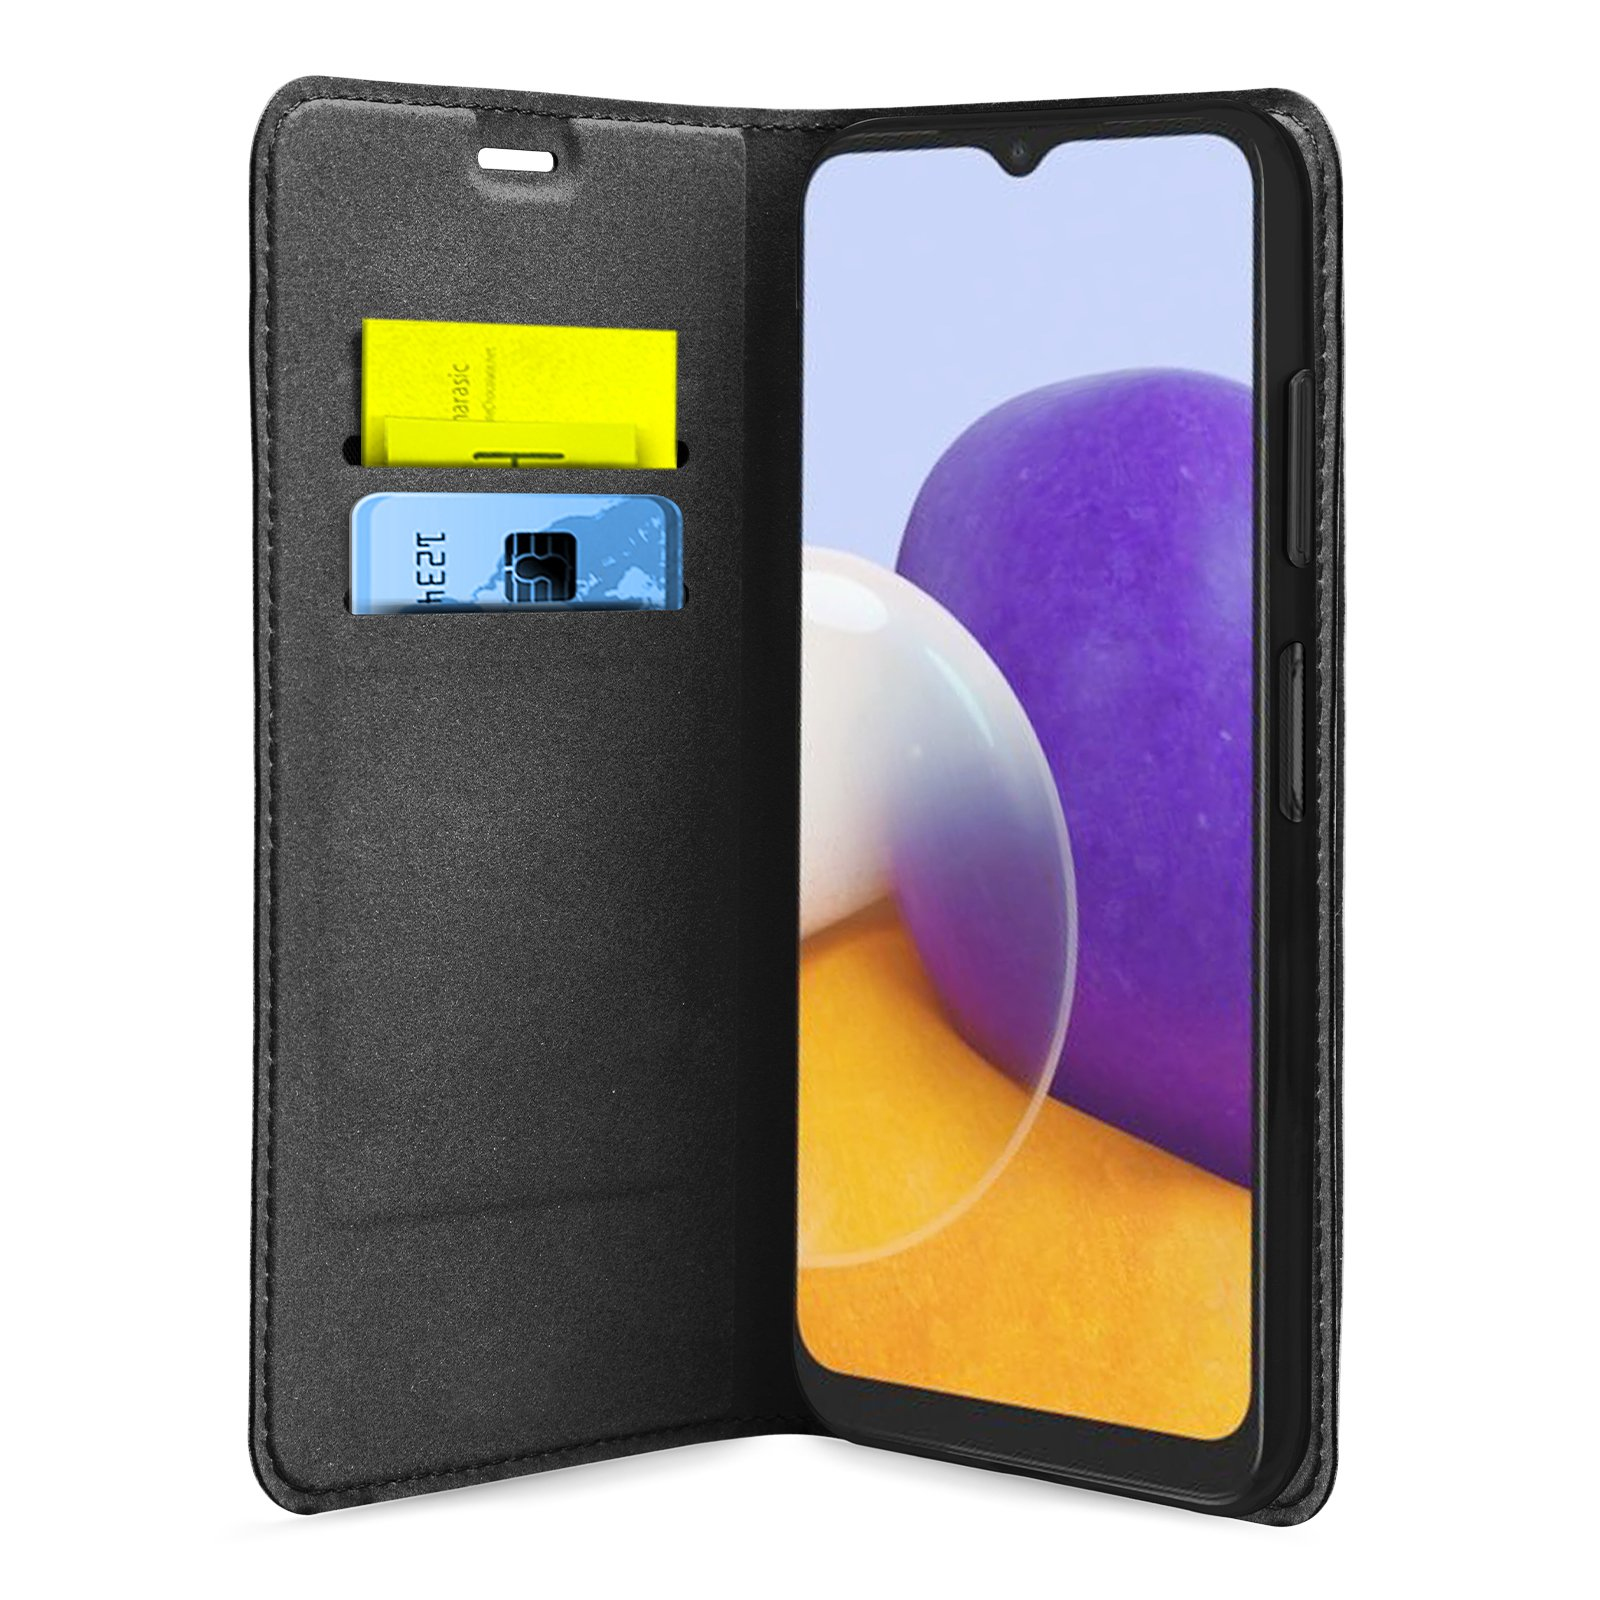 SBS Book Wallet Lite Samsung Galaxy A22 5G schwarz